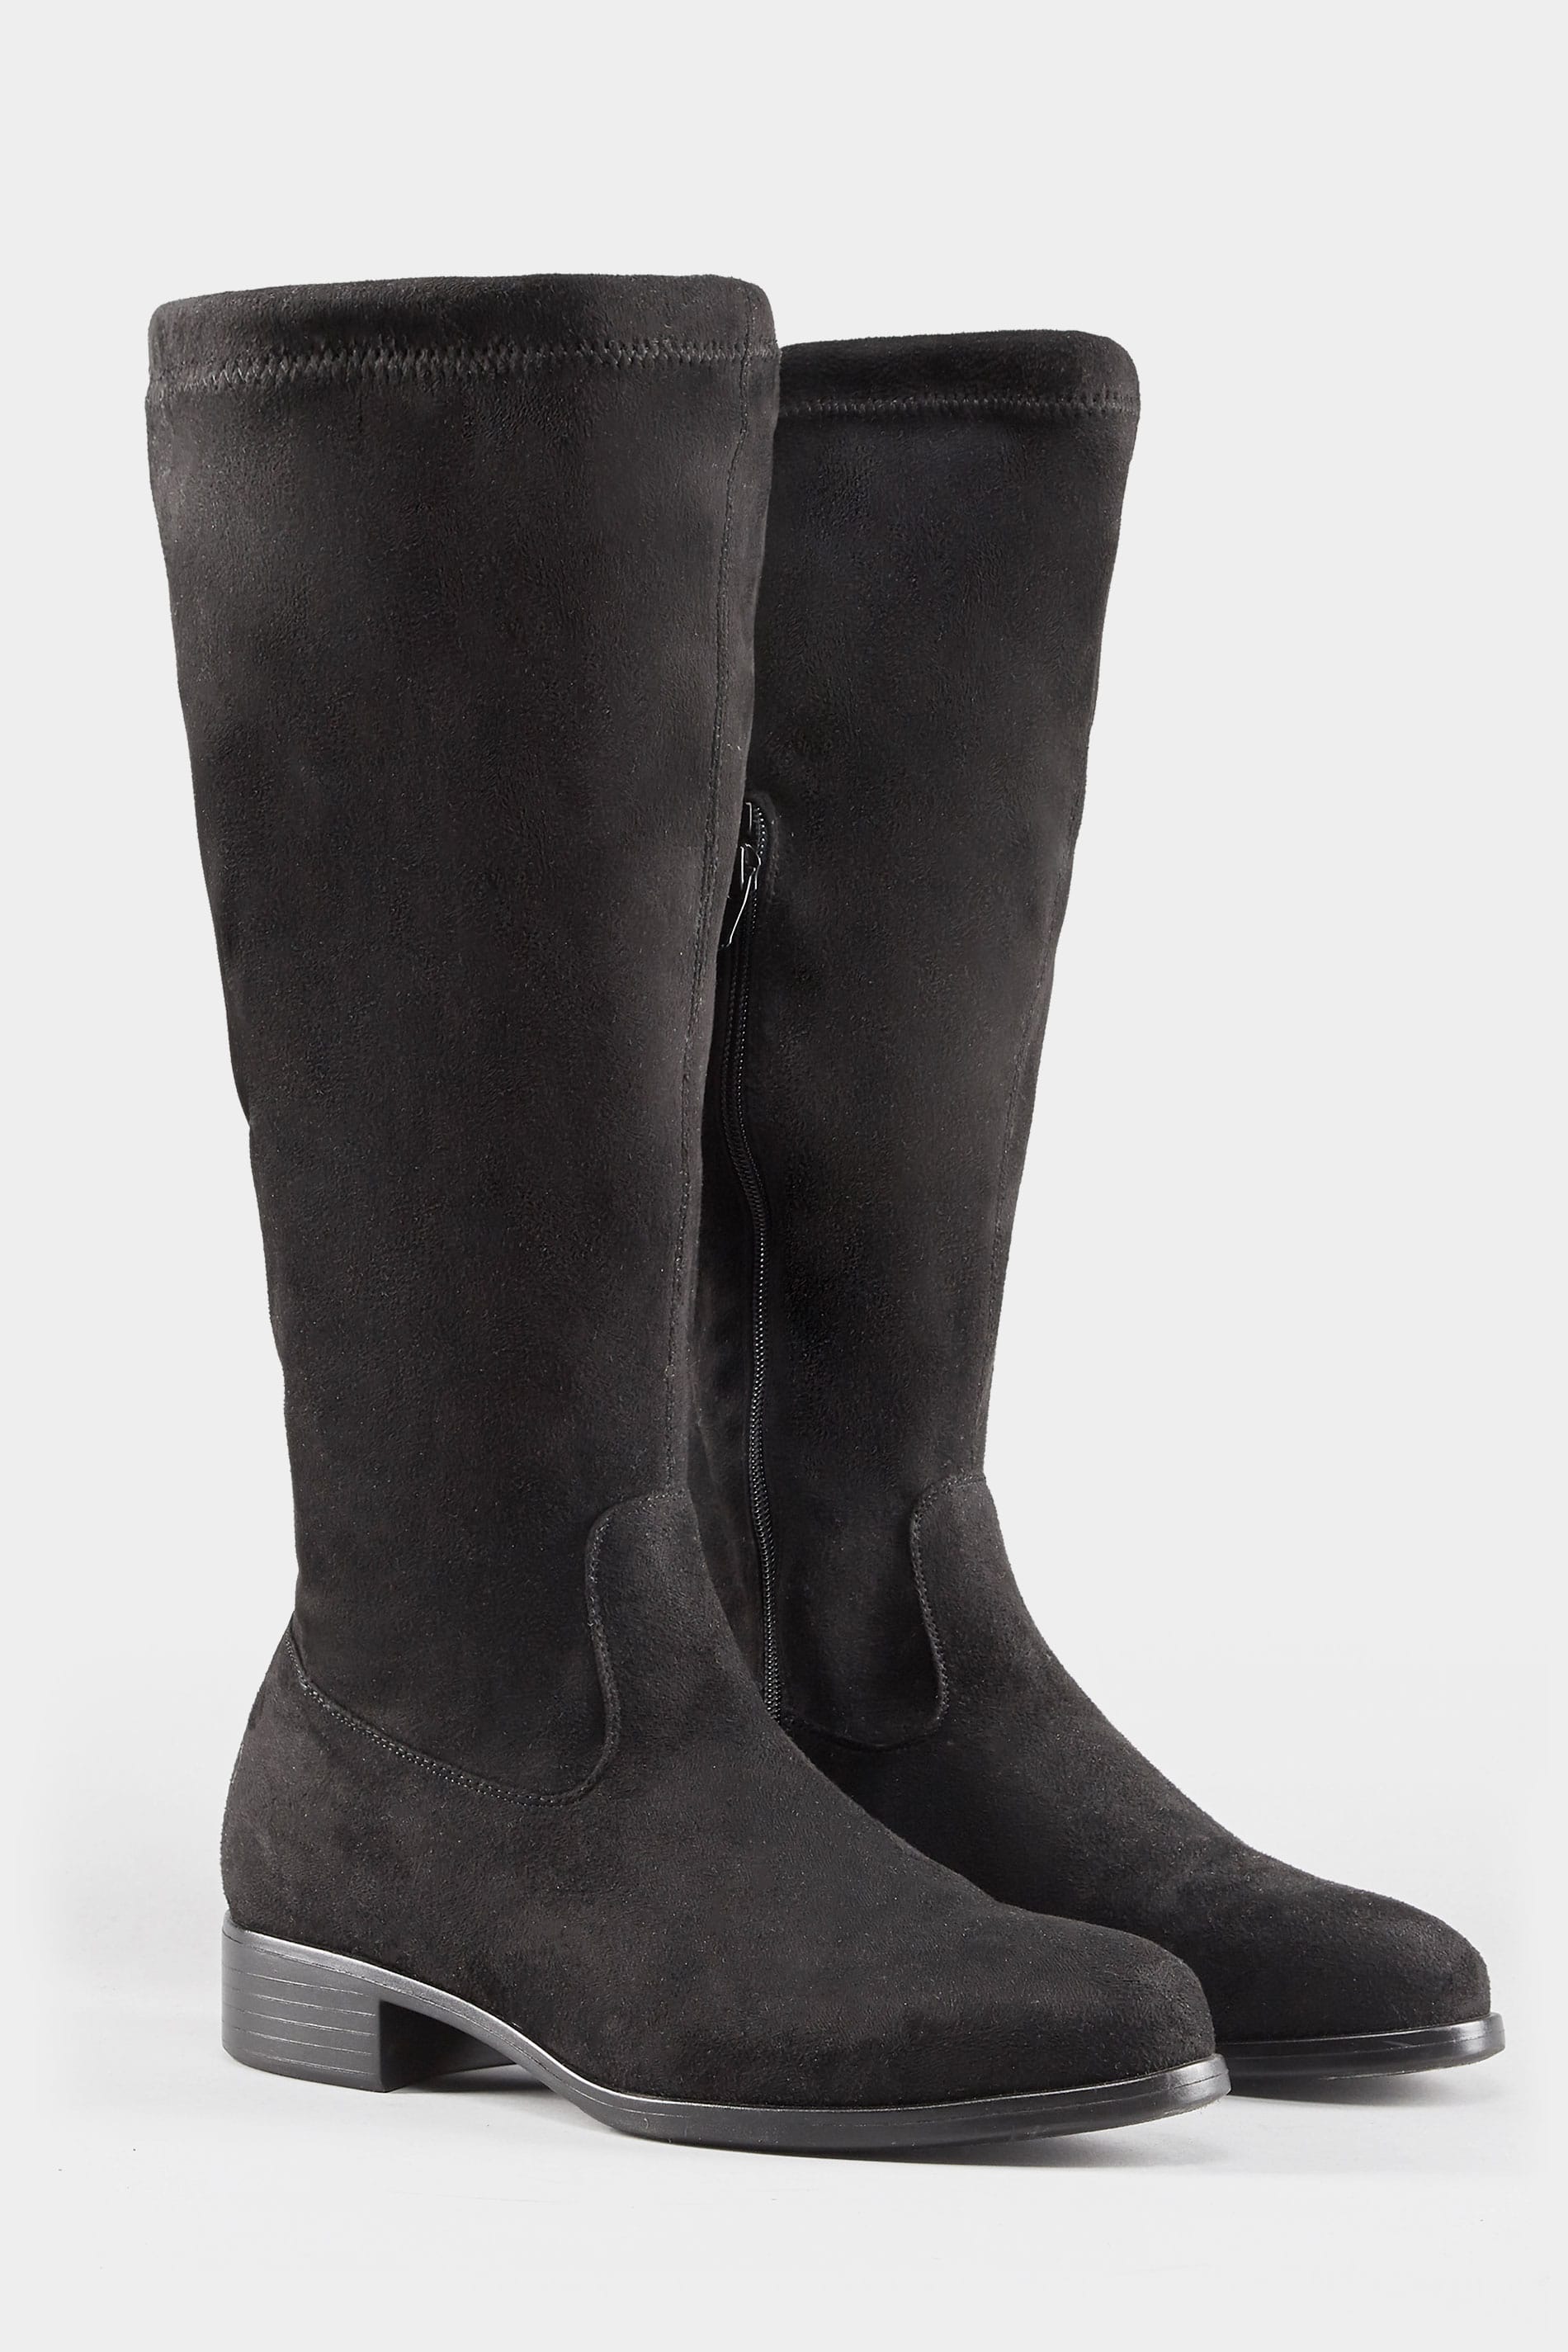 Black Stretch Knee High Boot In EEE Fit, Sizes 4EEE to 10EEE